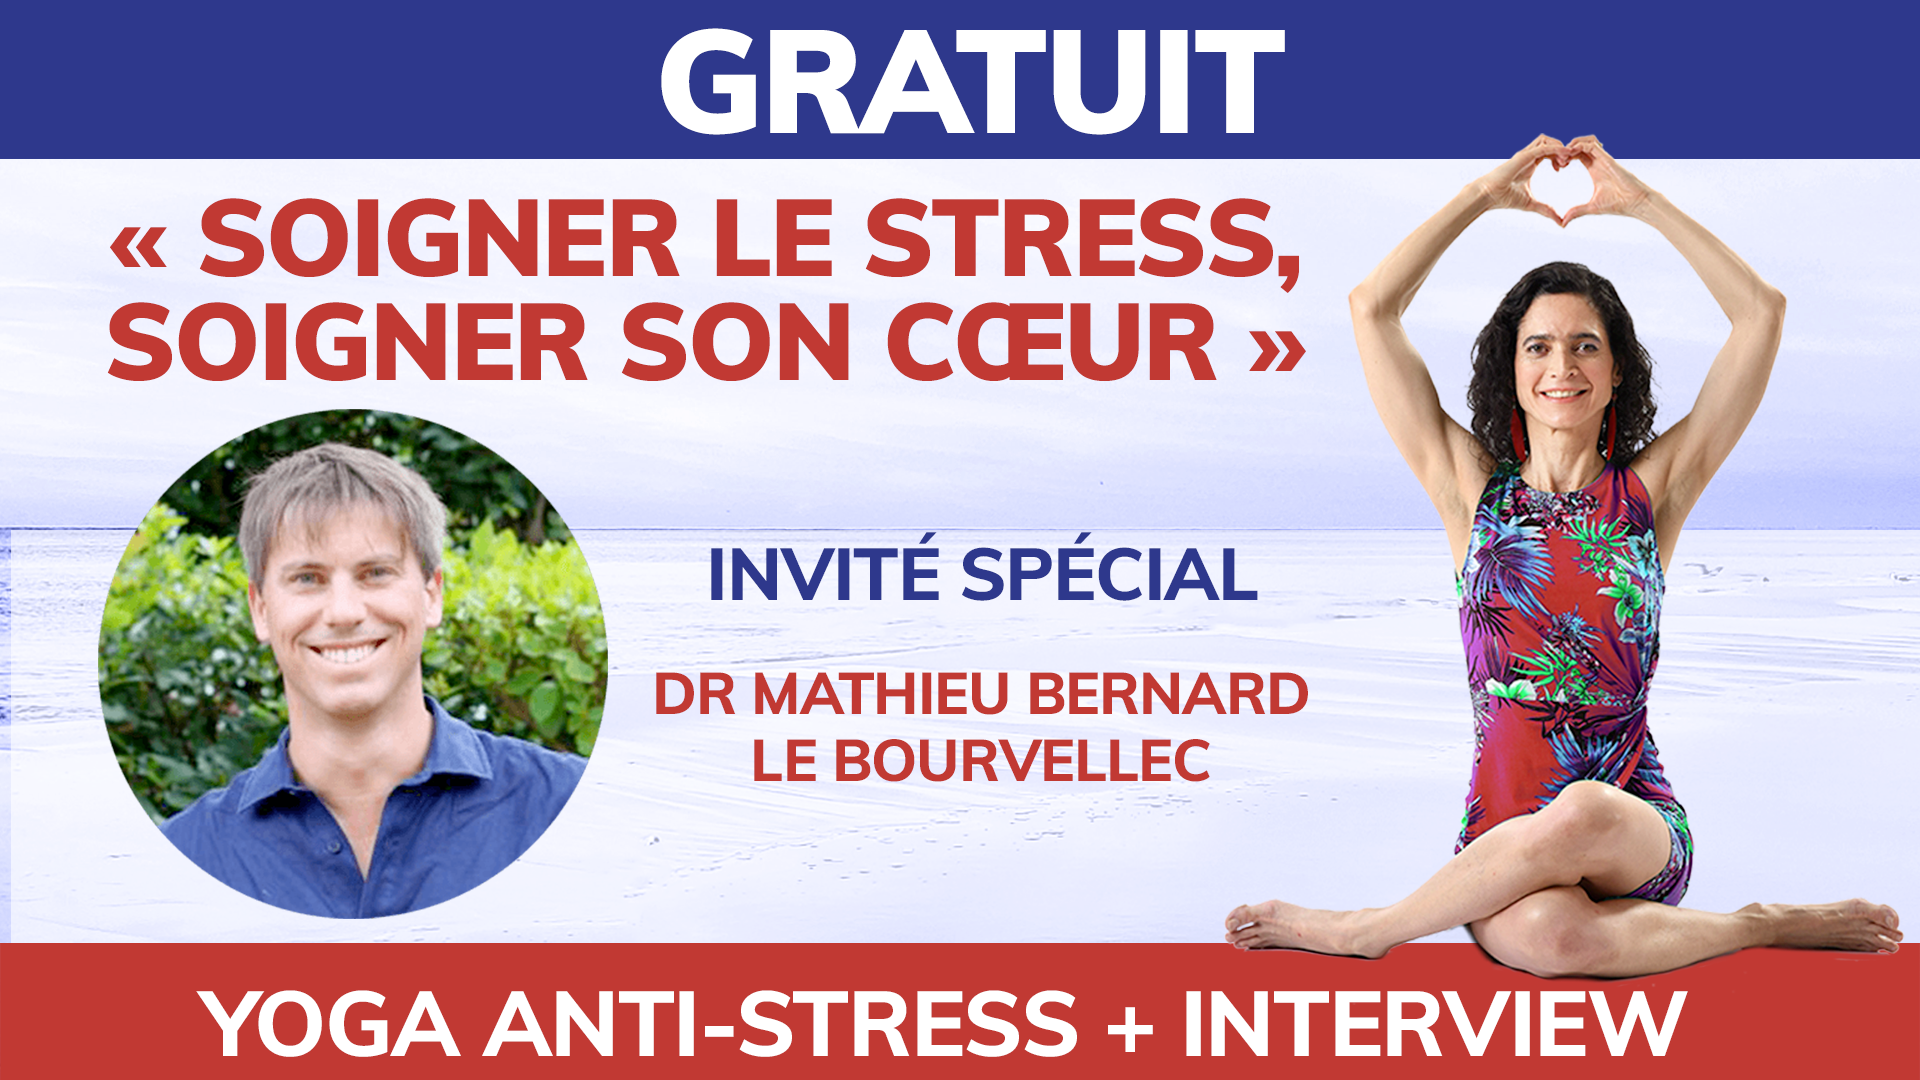 Carolina de la Cuesta interview le Dr Mathieu Bernard-Le Bourvellec sur Happyculture.tv